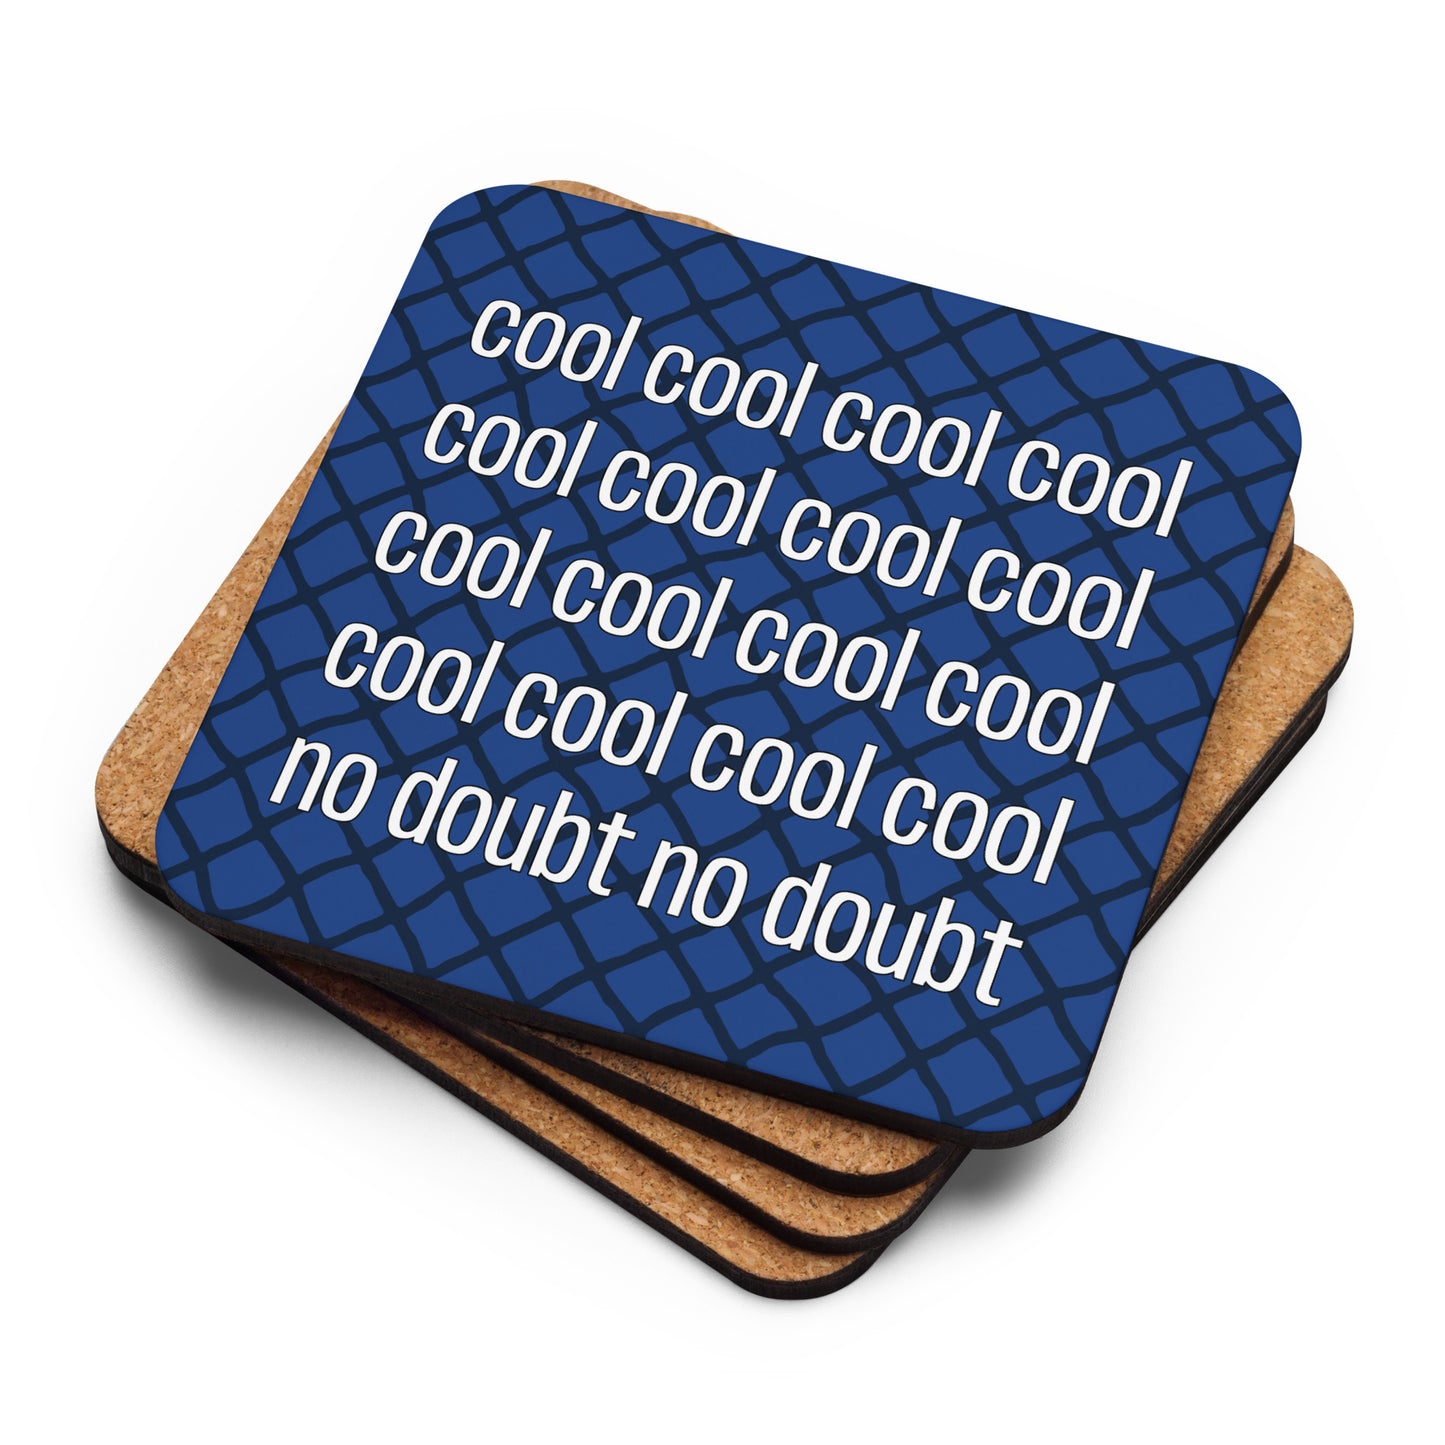 Cool Cool Cool Cool Cork-back coaster